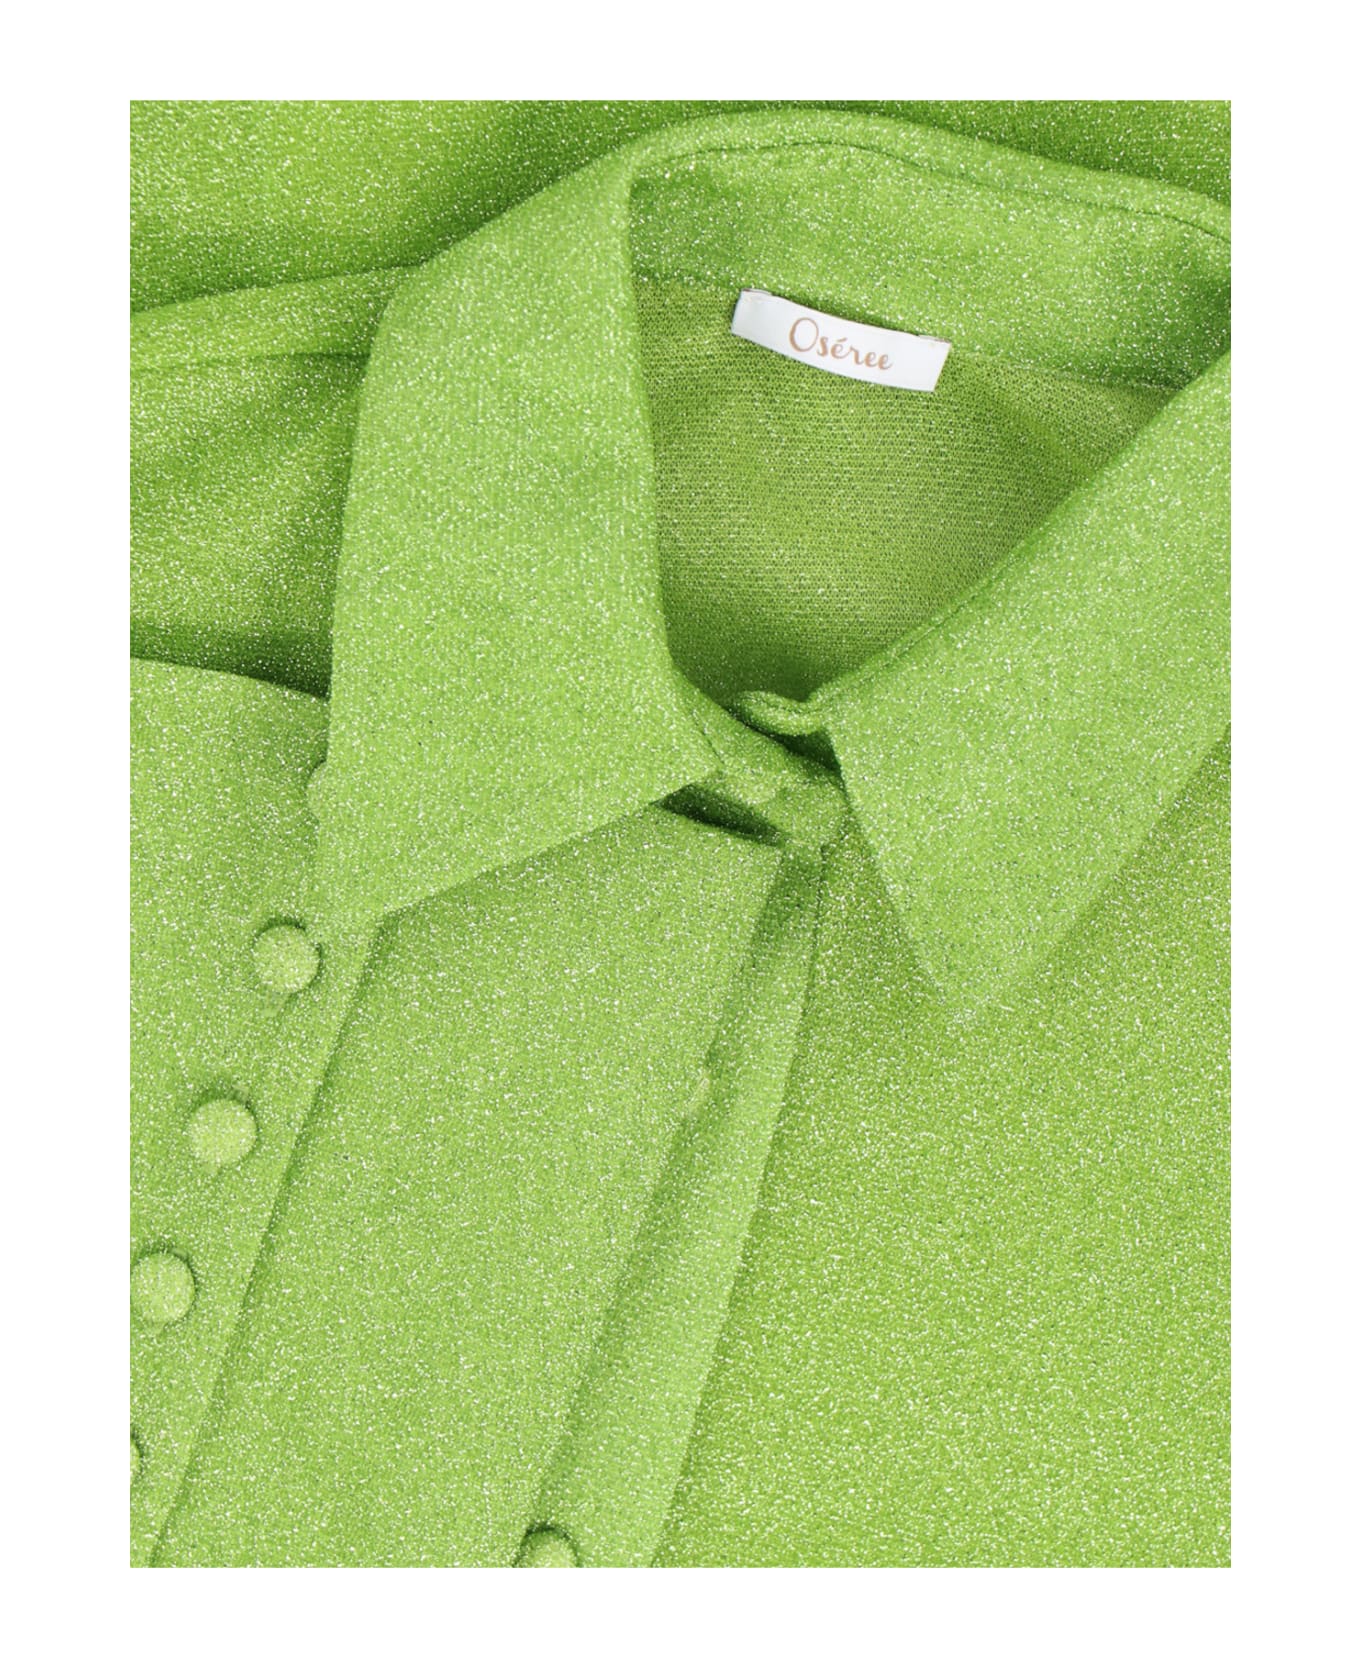 Oseree 'lumière Sleeves' Shirt - Green シャツ